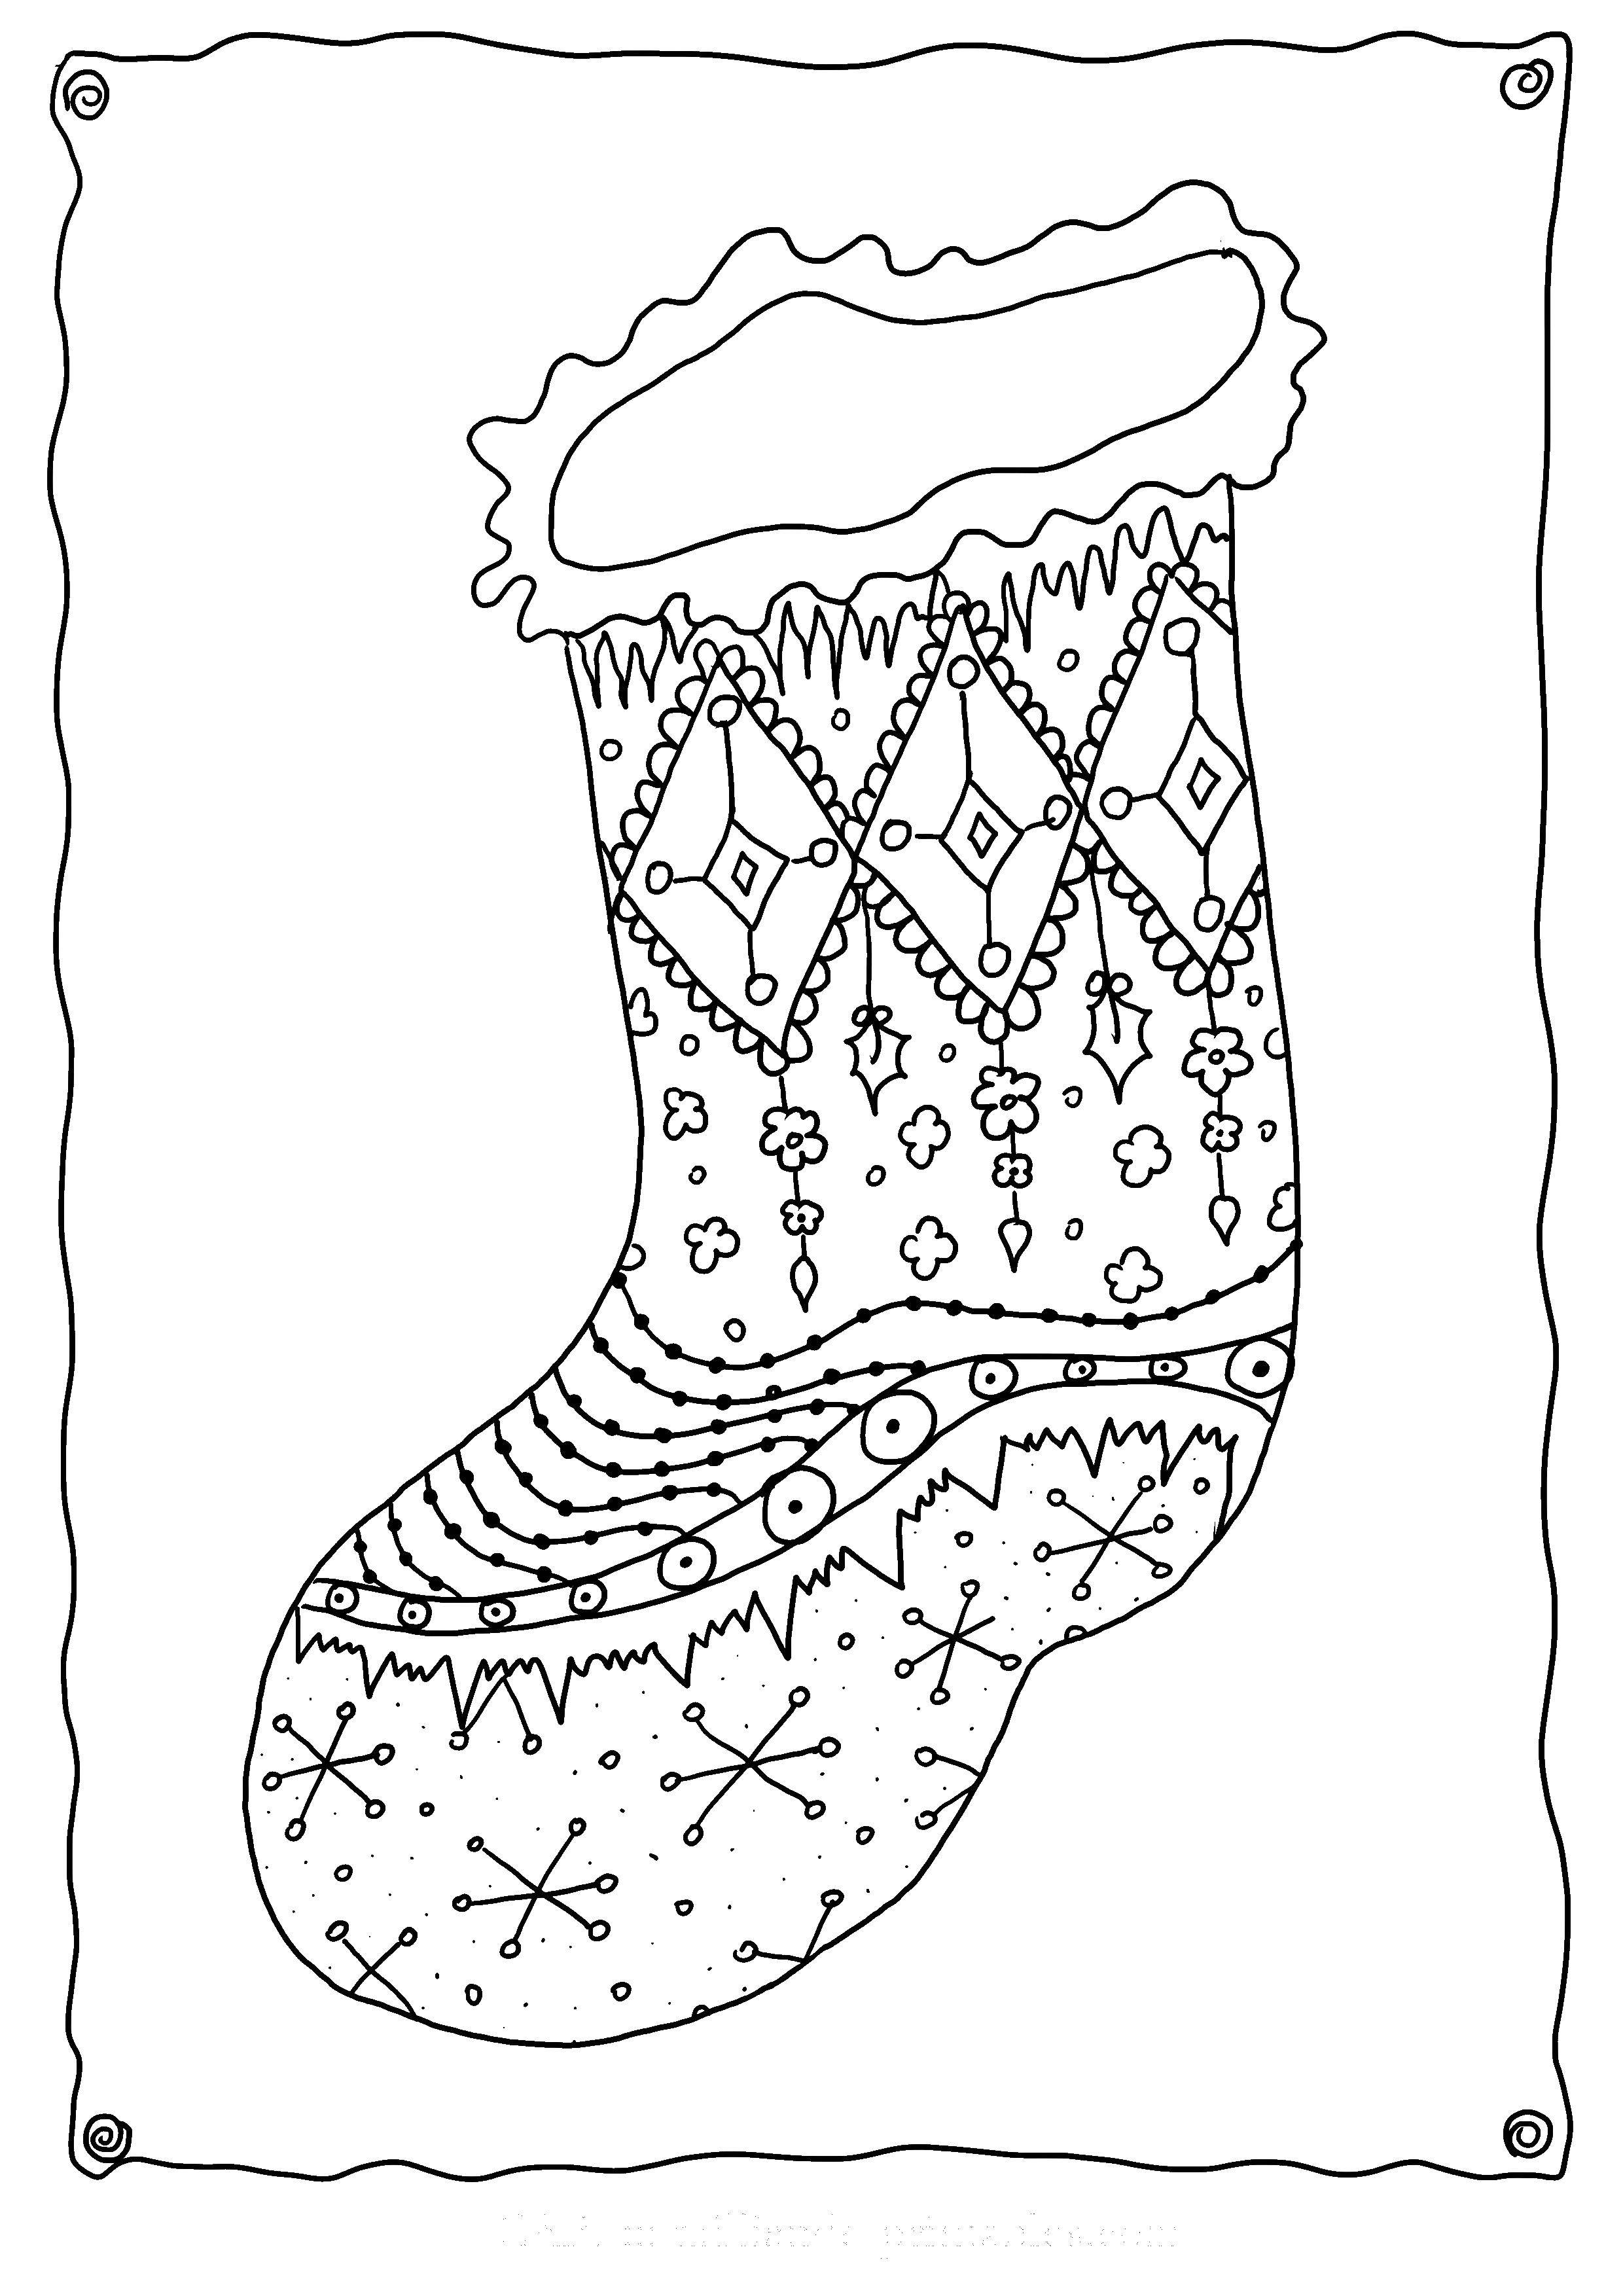 Название: Раскраска Зимний носок. Категория: Одежда. Теги: одежда, носок.